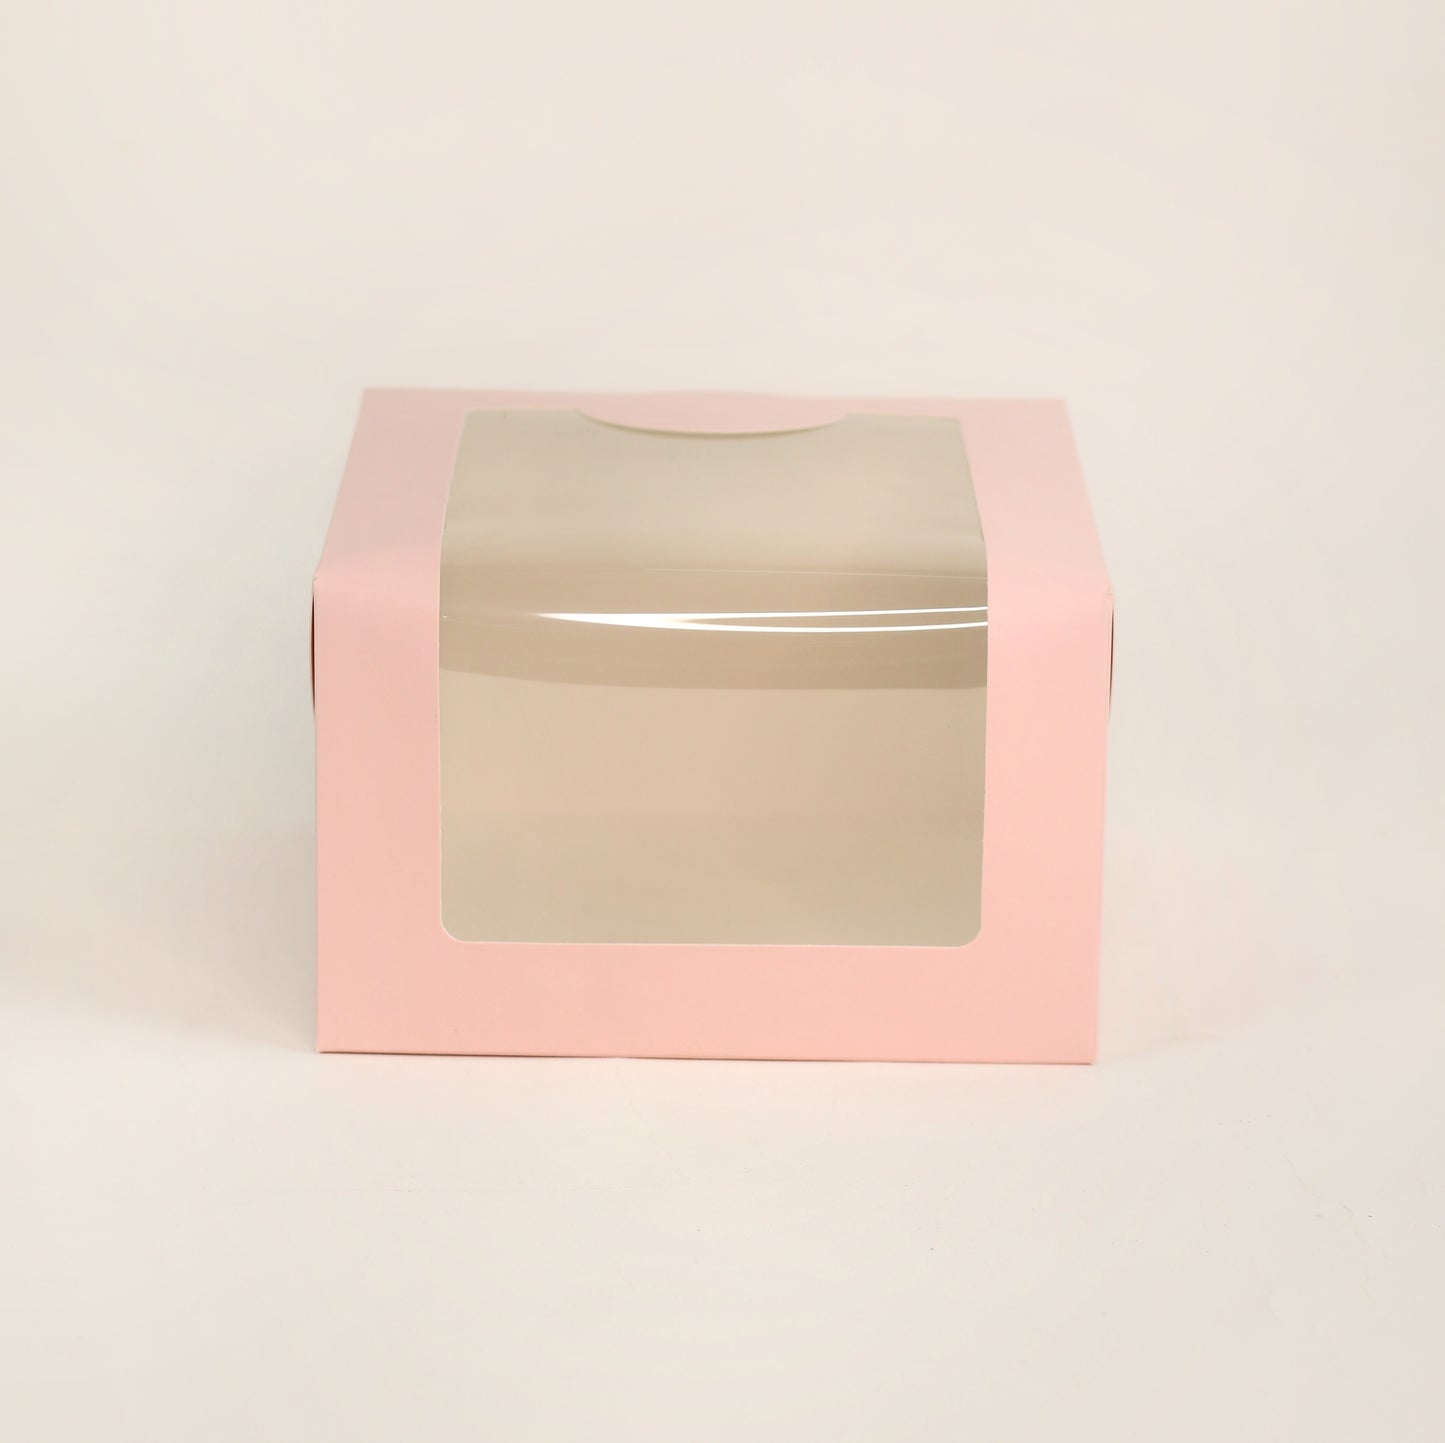 1 KG DUAL WINDOW CAKE BOX